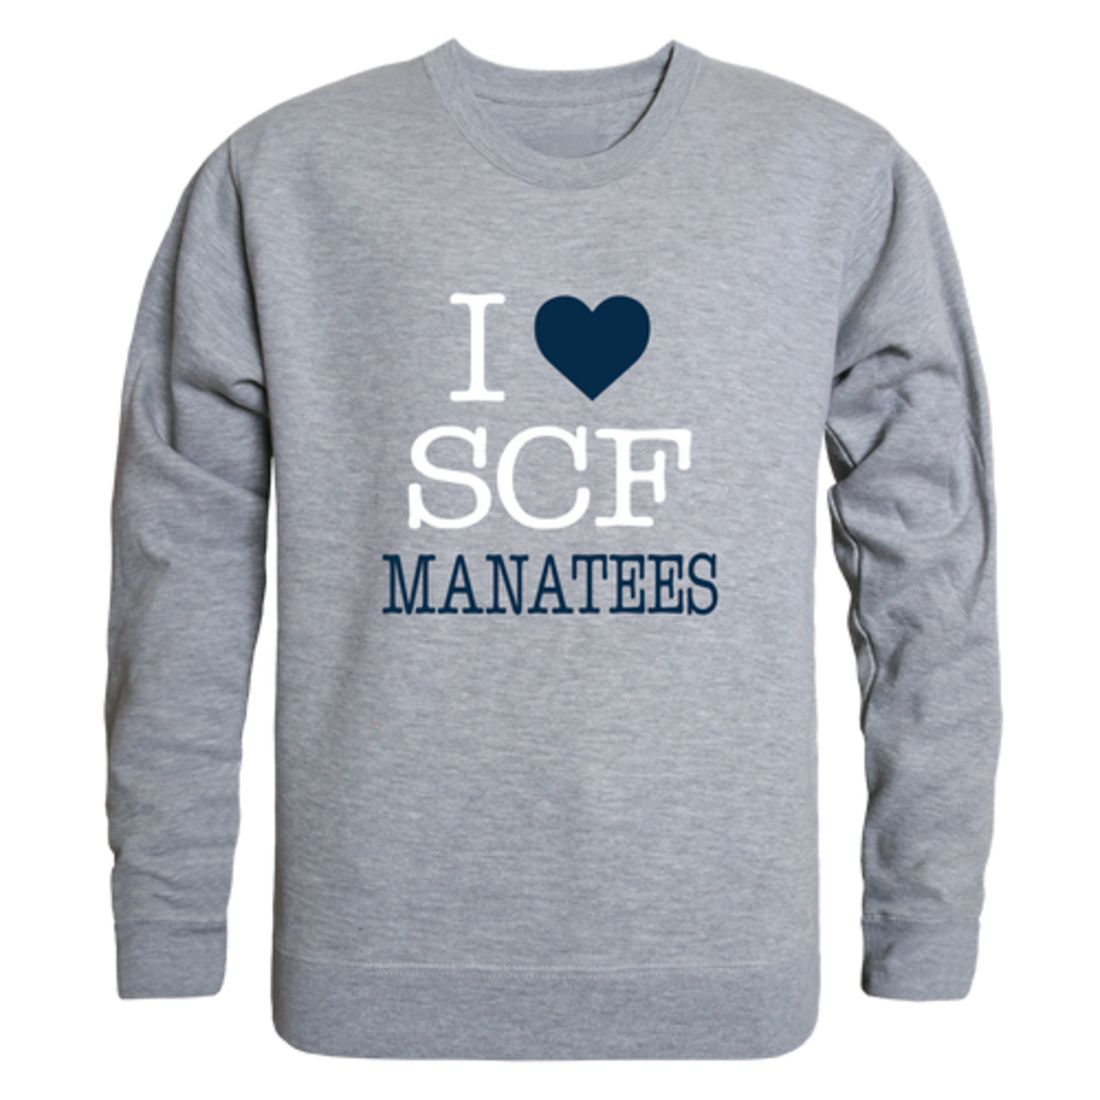 I-Love-State-College-of-Florida-Manatees-Fleece-Crewneck-Pullover-Sweatshirt